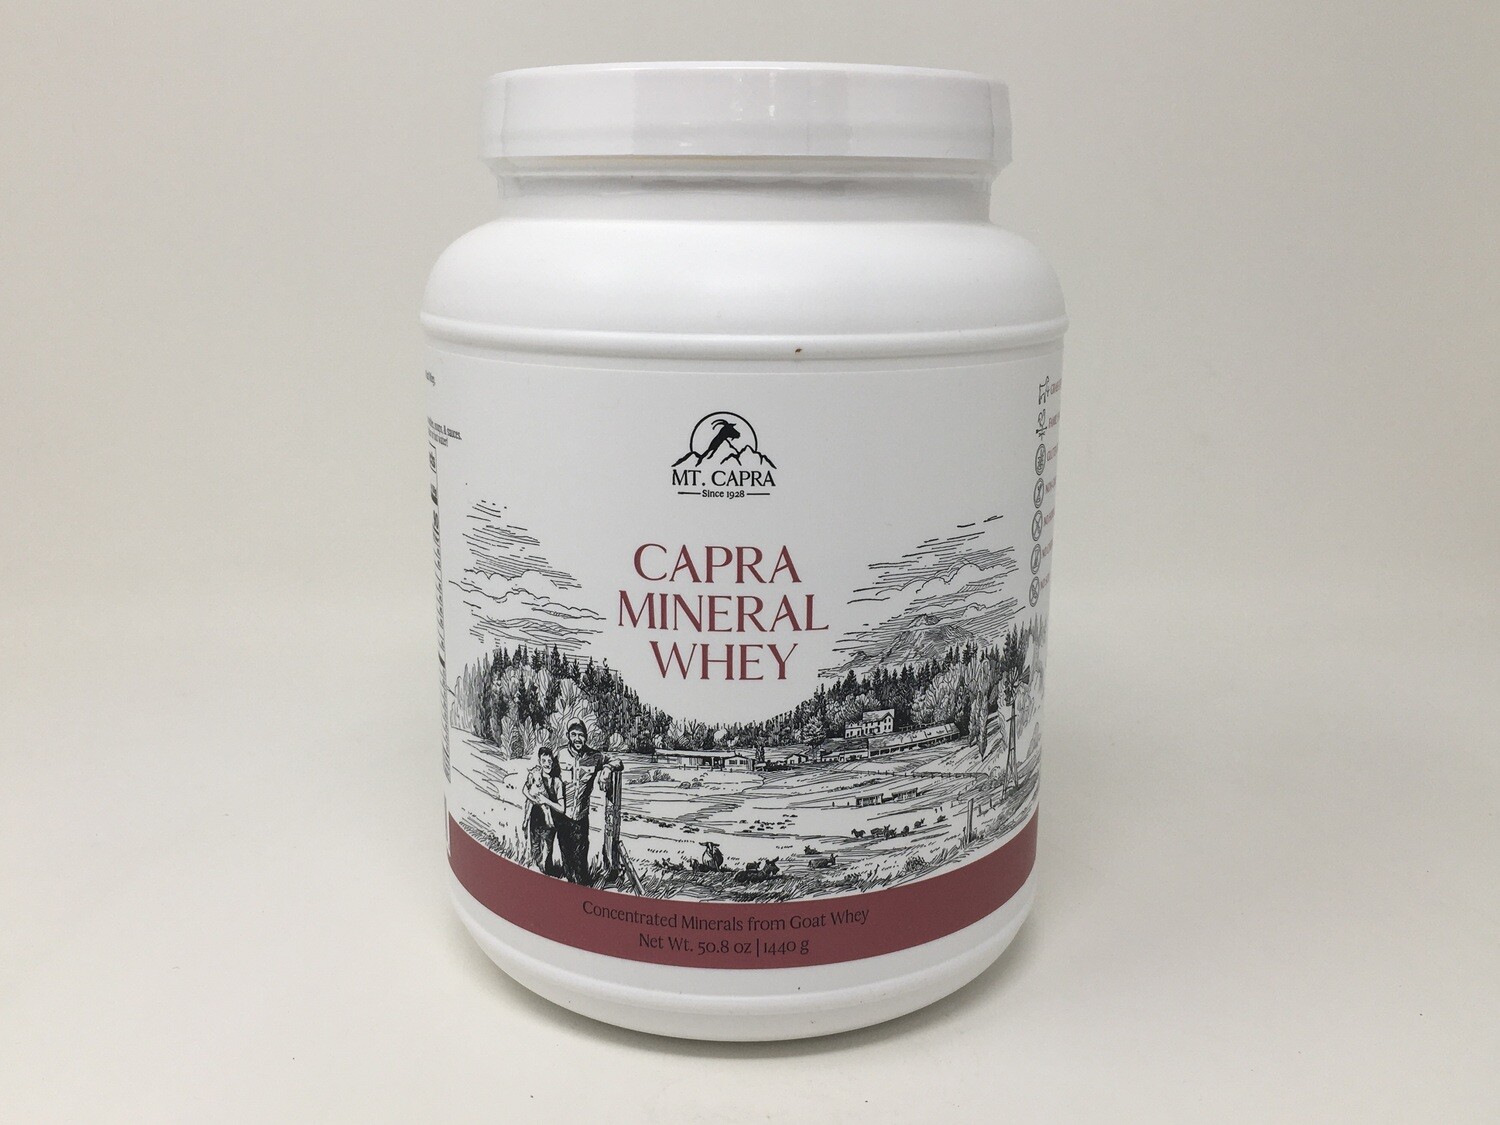 Capra Mineral Whey 50.8 (Mt. Capra)